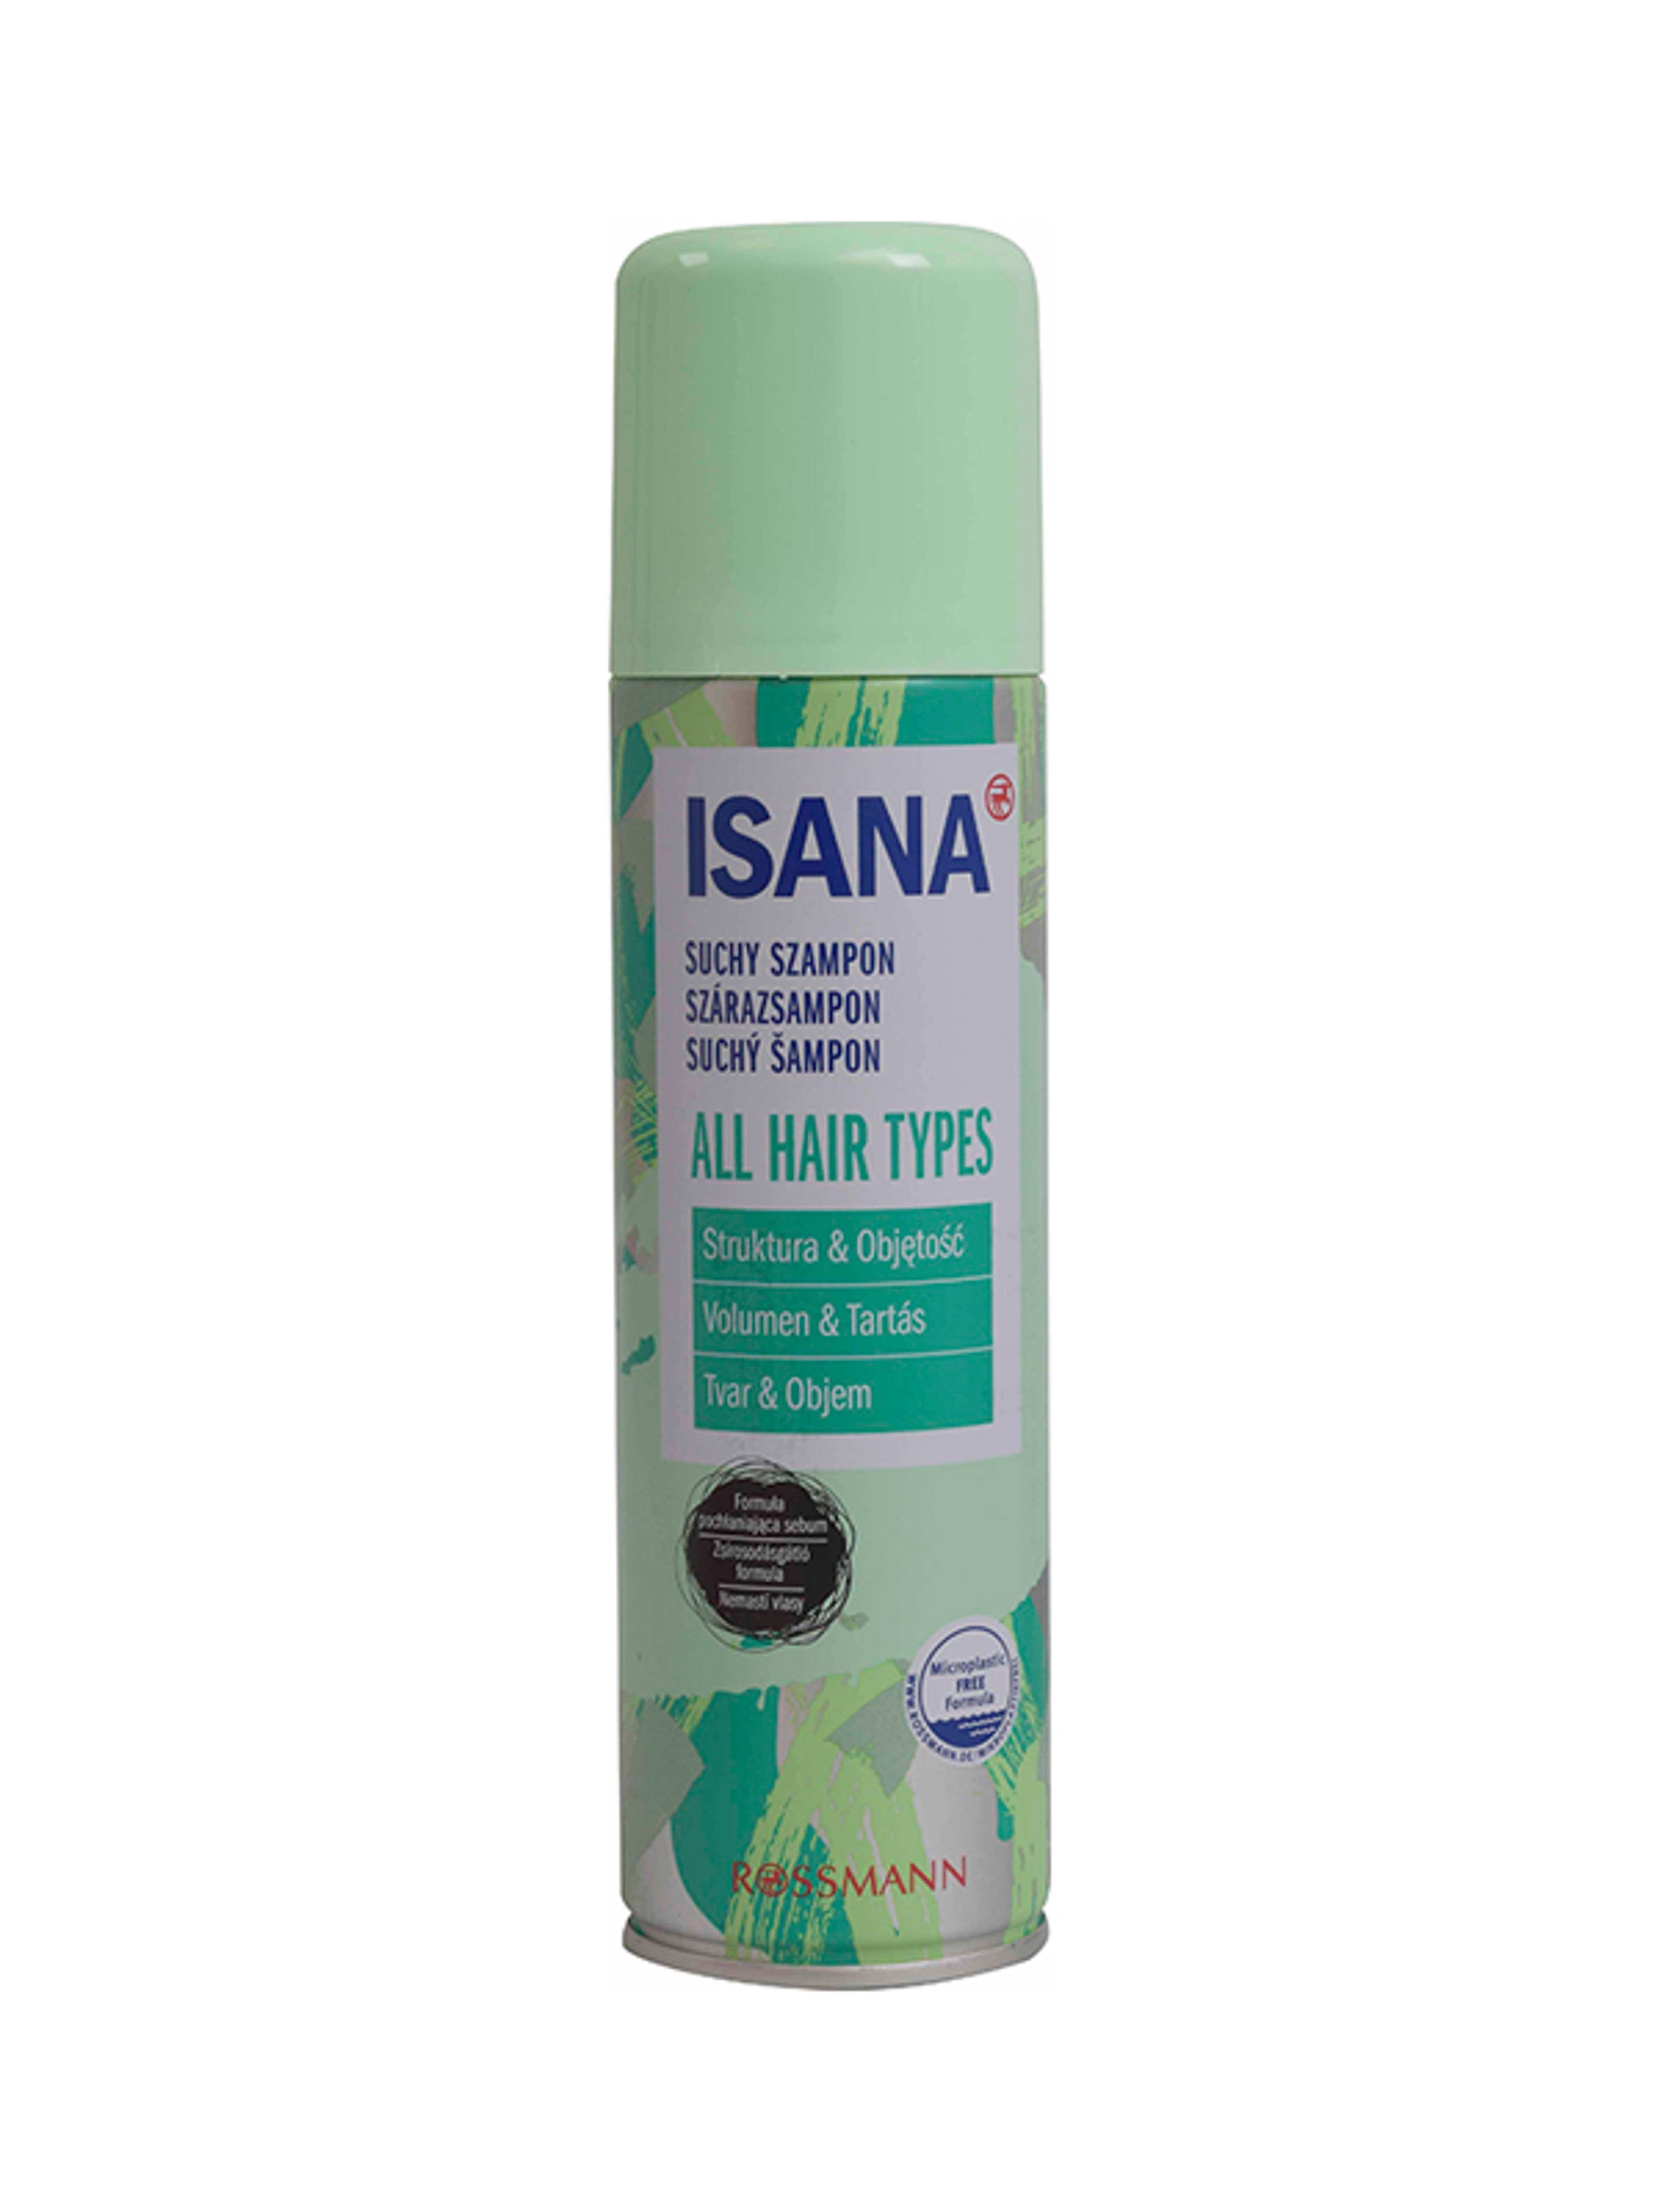 Isana Hair szárazsampon - 200 ml